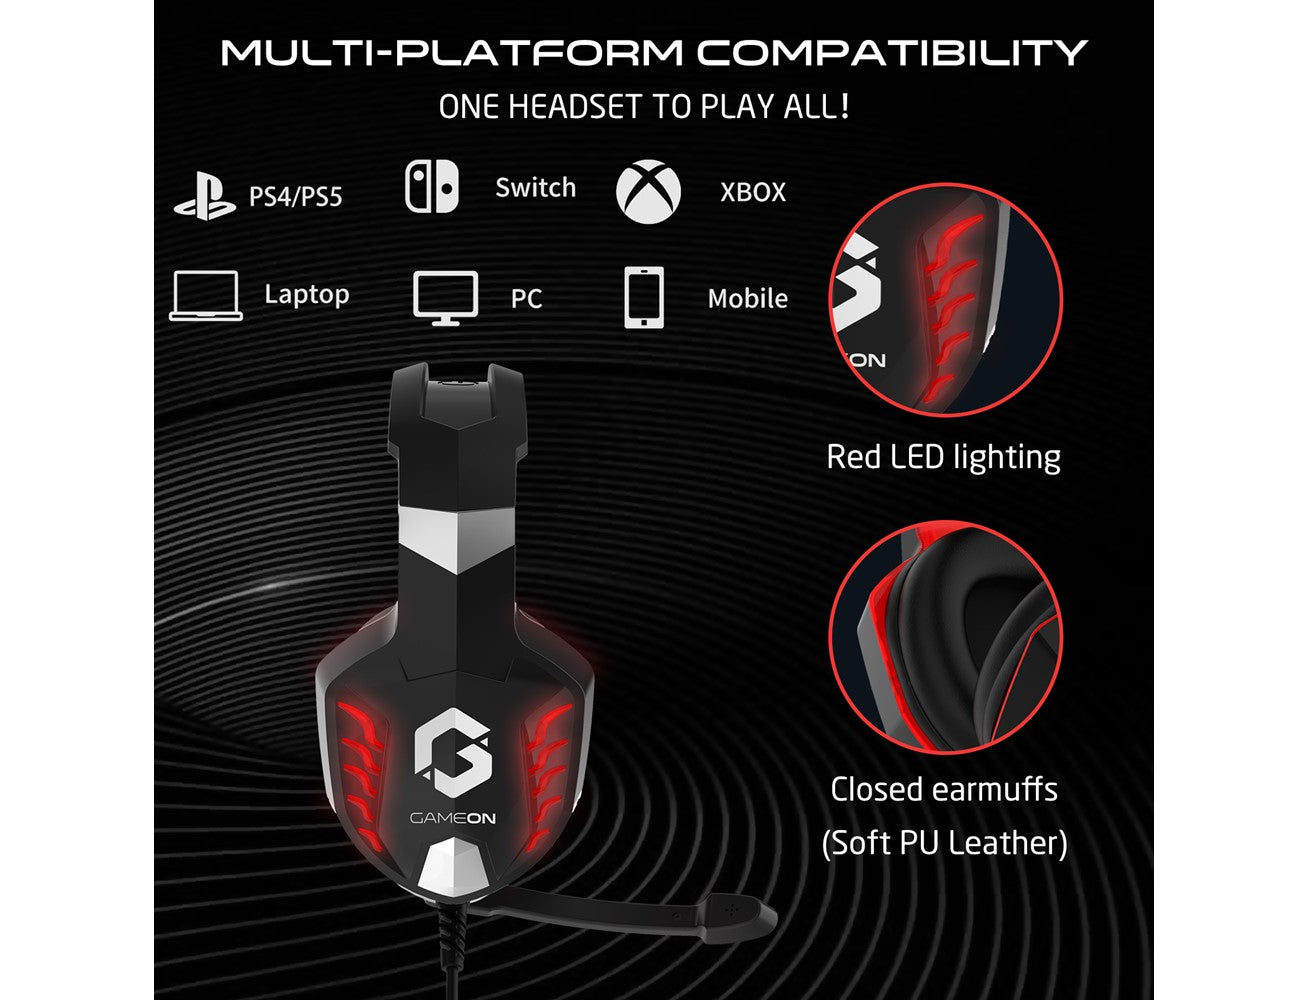 GAMEON GOK901 Nightfall LED Gaming Headset - Black